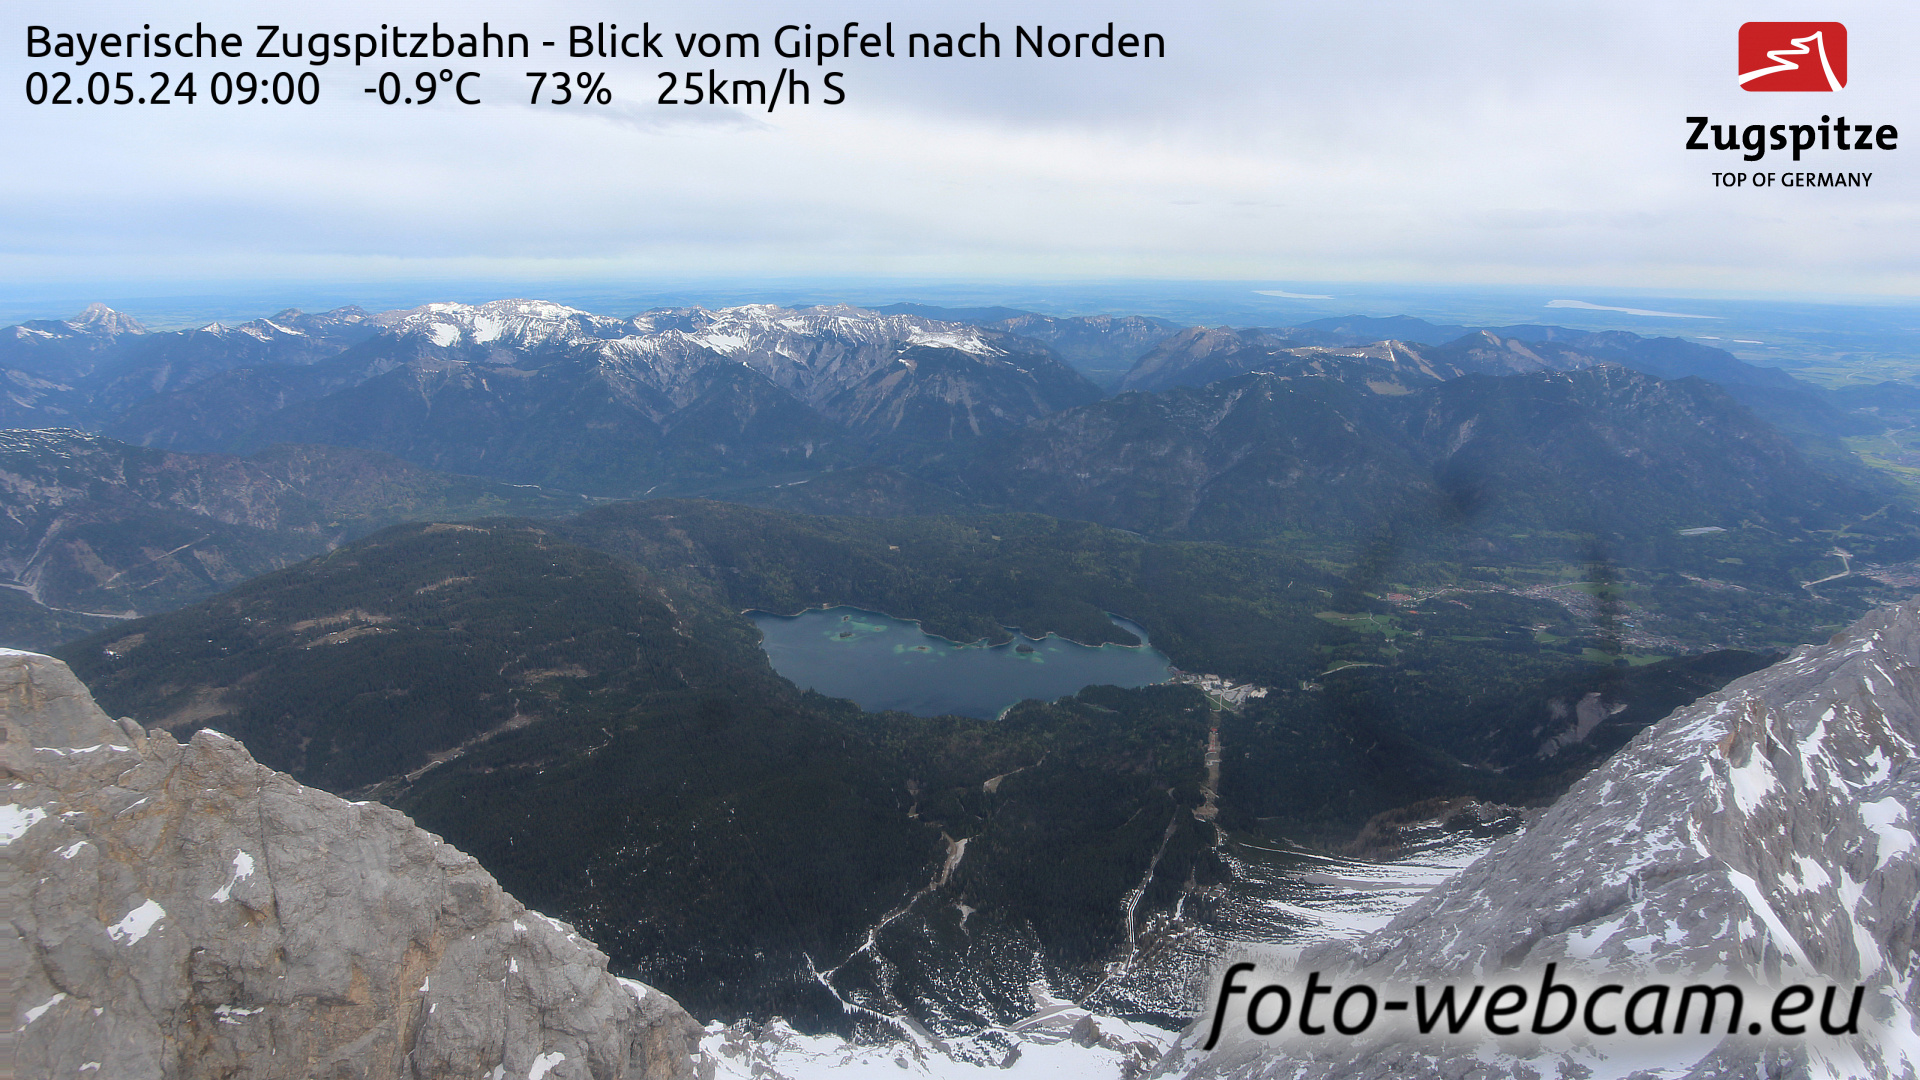 Zugspitze Sun. 09:06